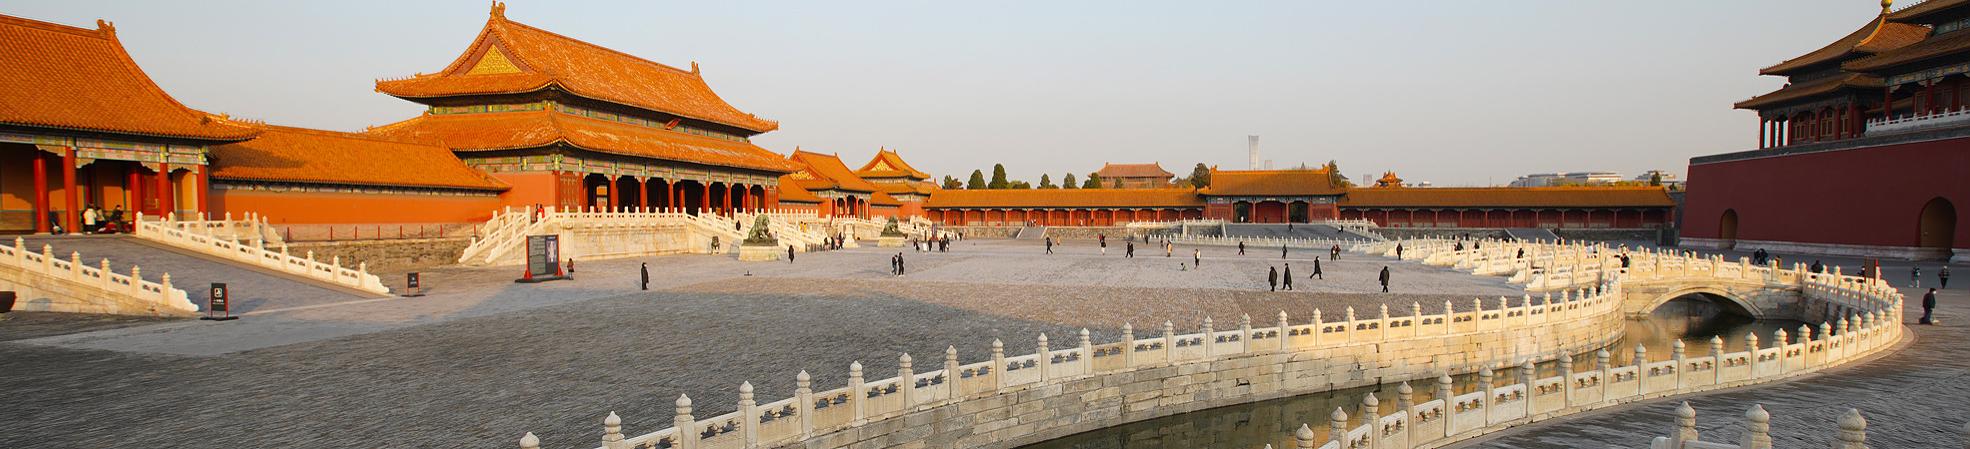 Chinese Architectures - Beijing Hutongs, the Chinese Quadrangle, Passes 